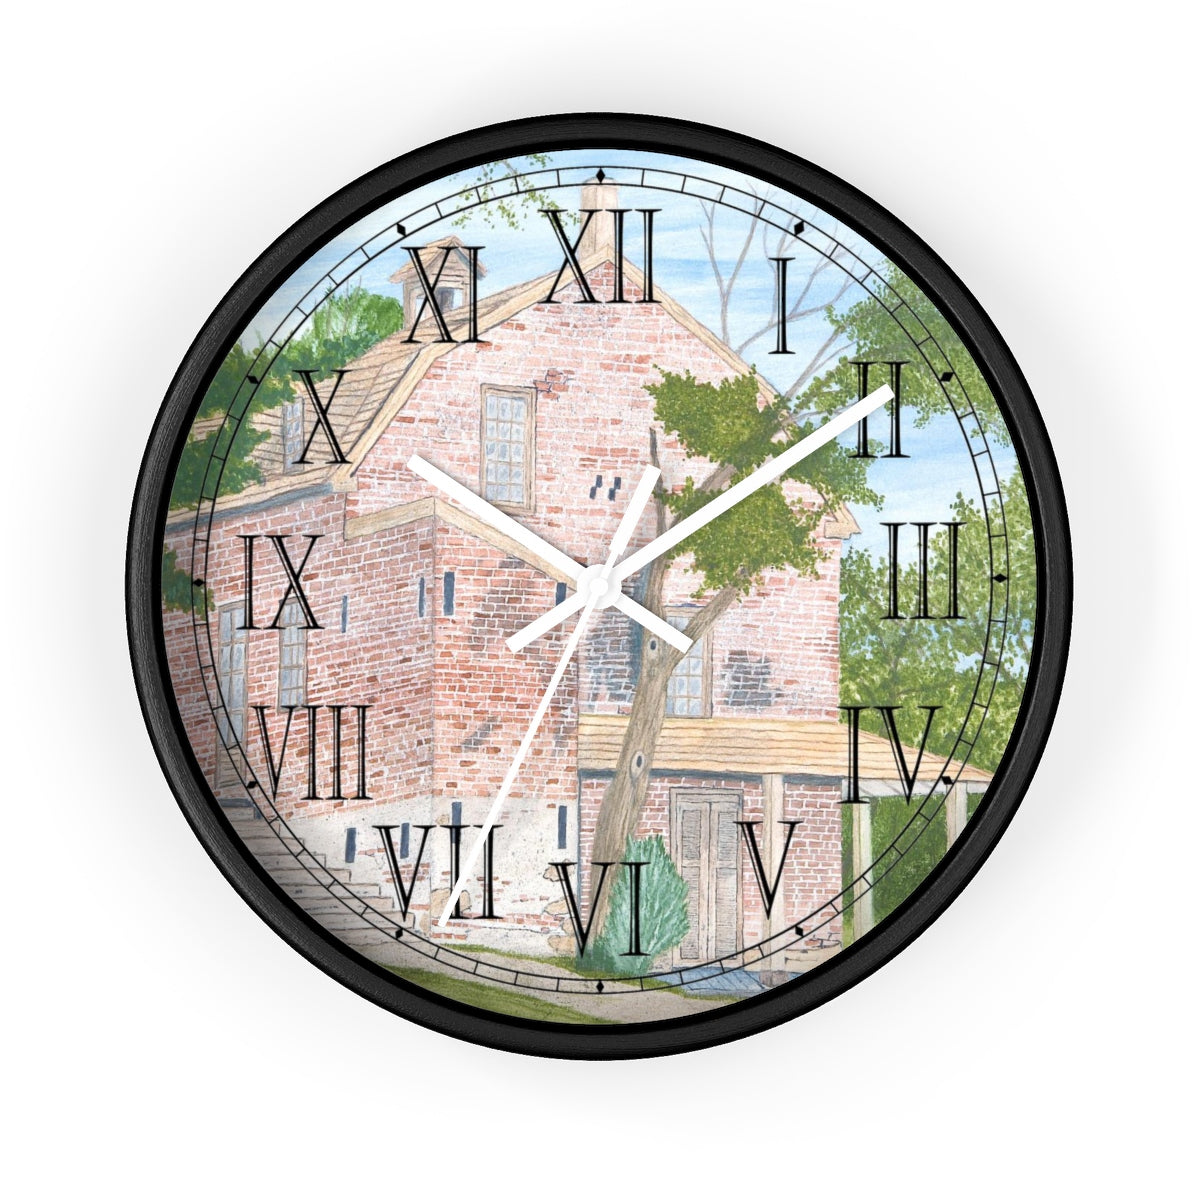 Village General Store Roman Numeral Clock